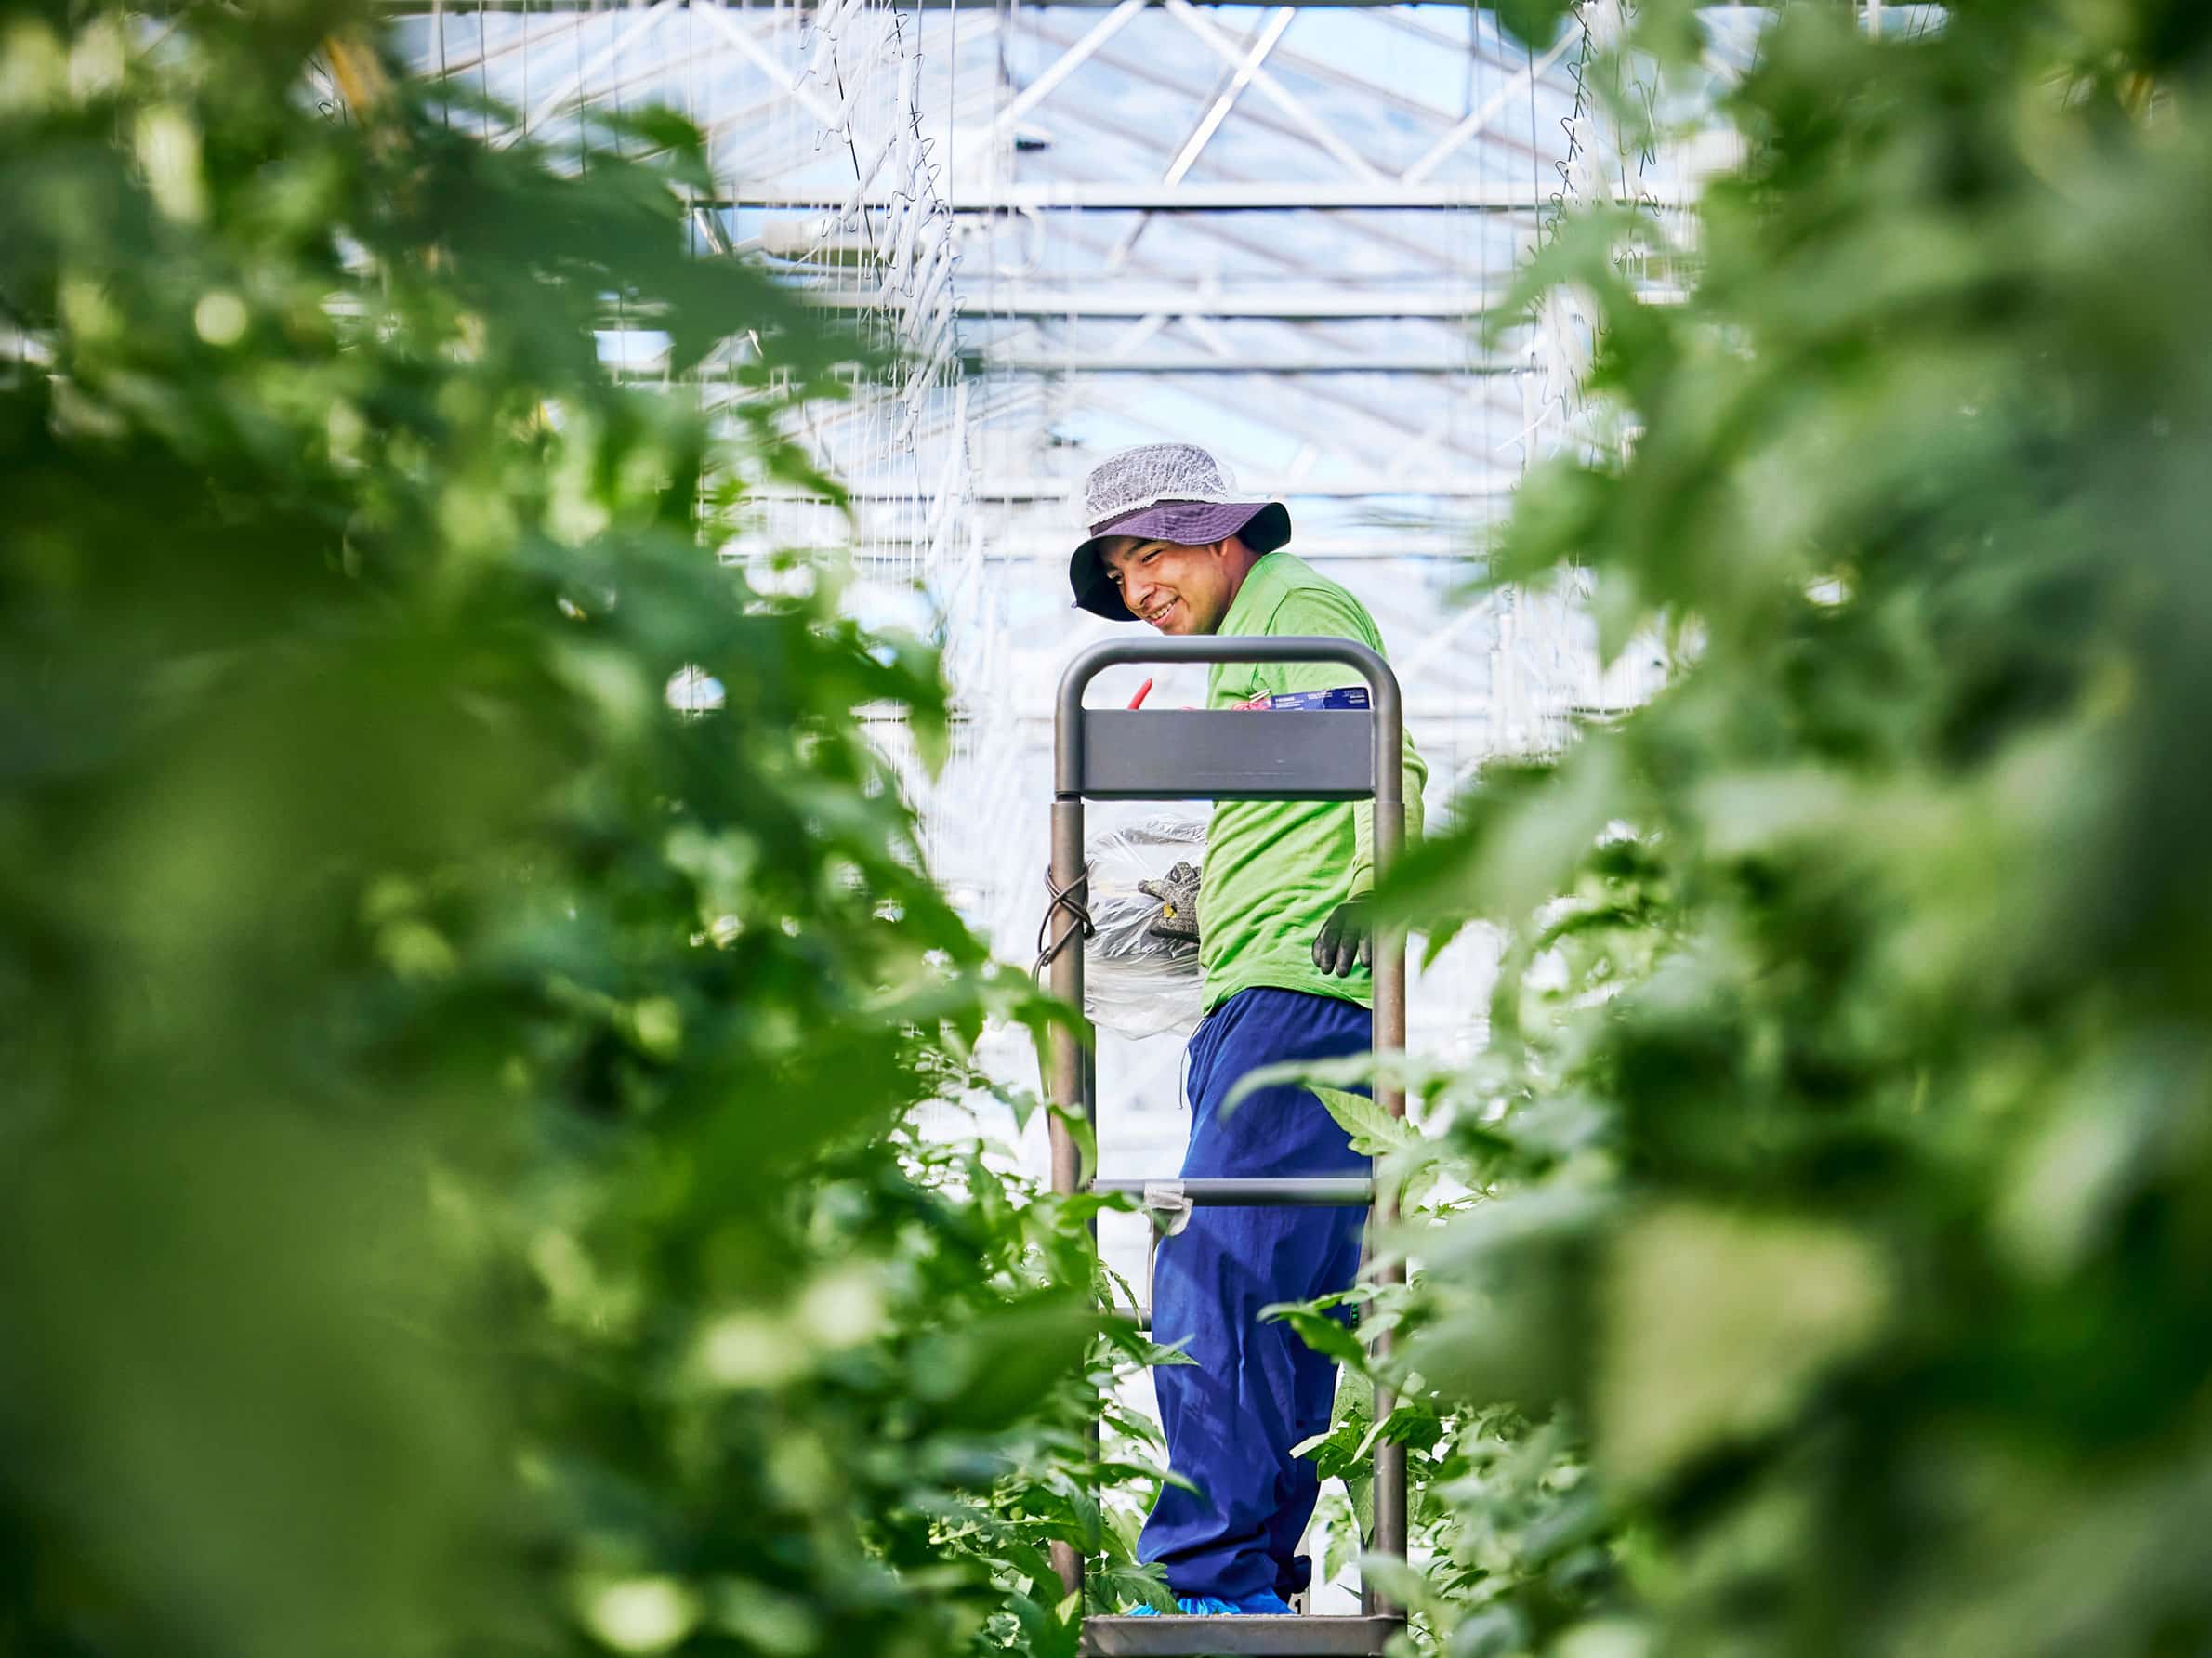 Worker in greenhouse